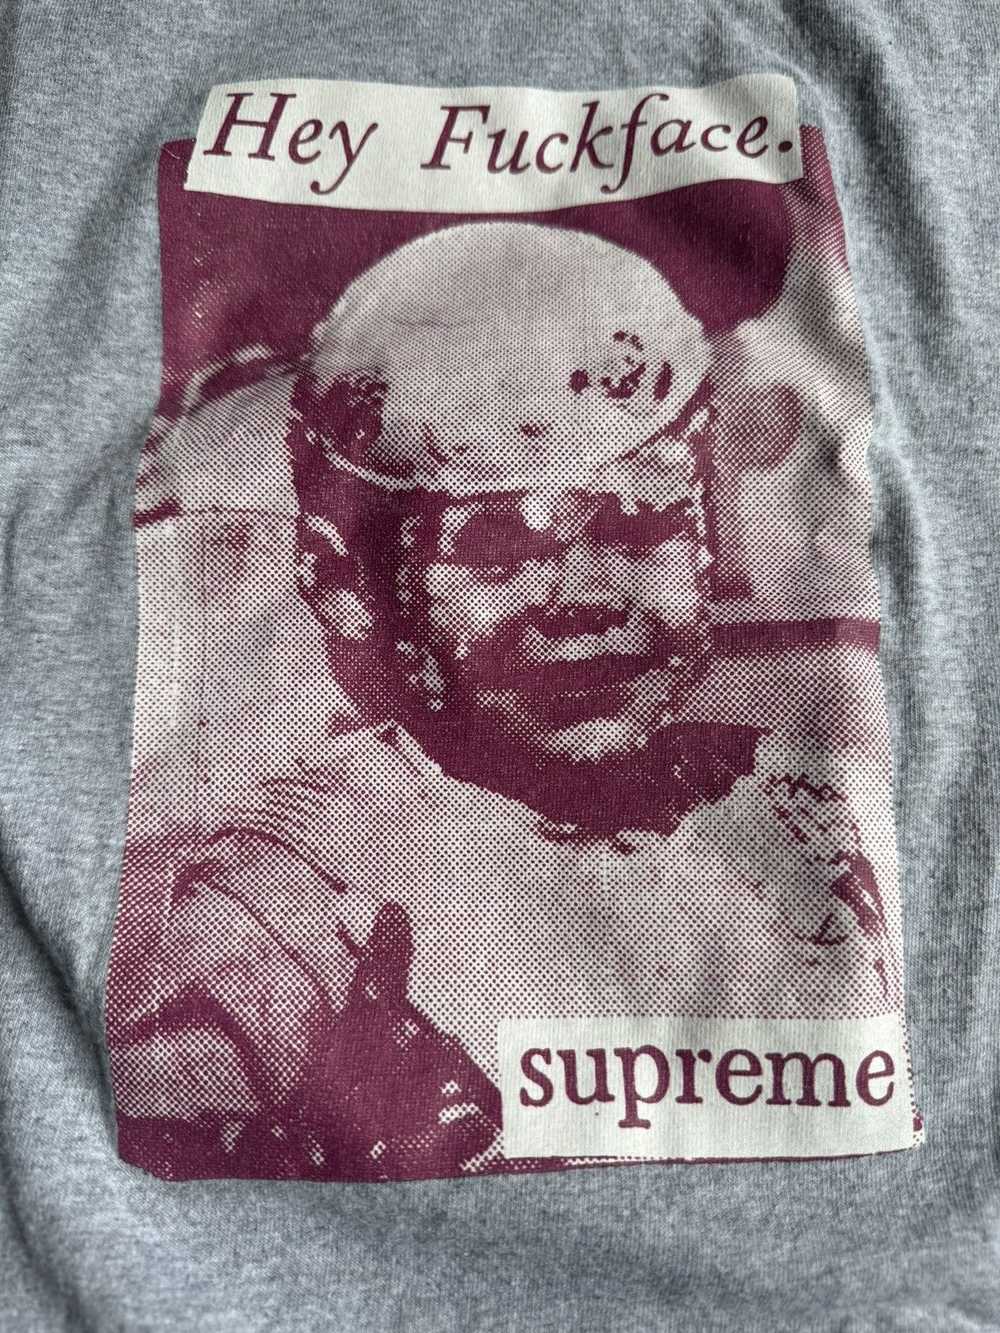 Supreme Supreme Fuck face Tee - image 2